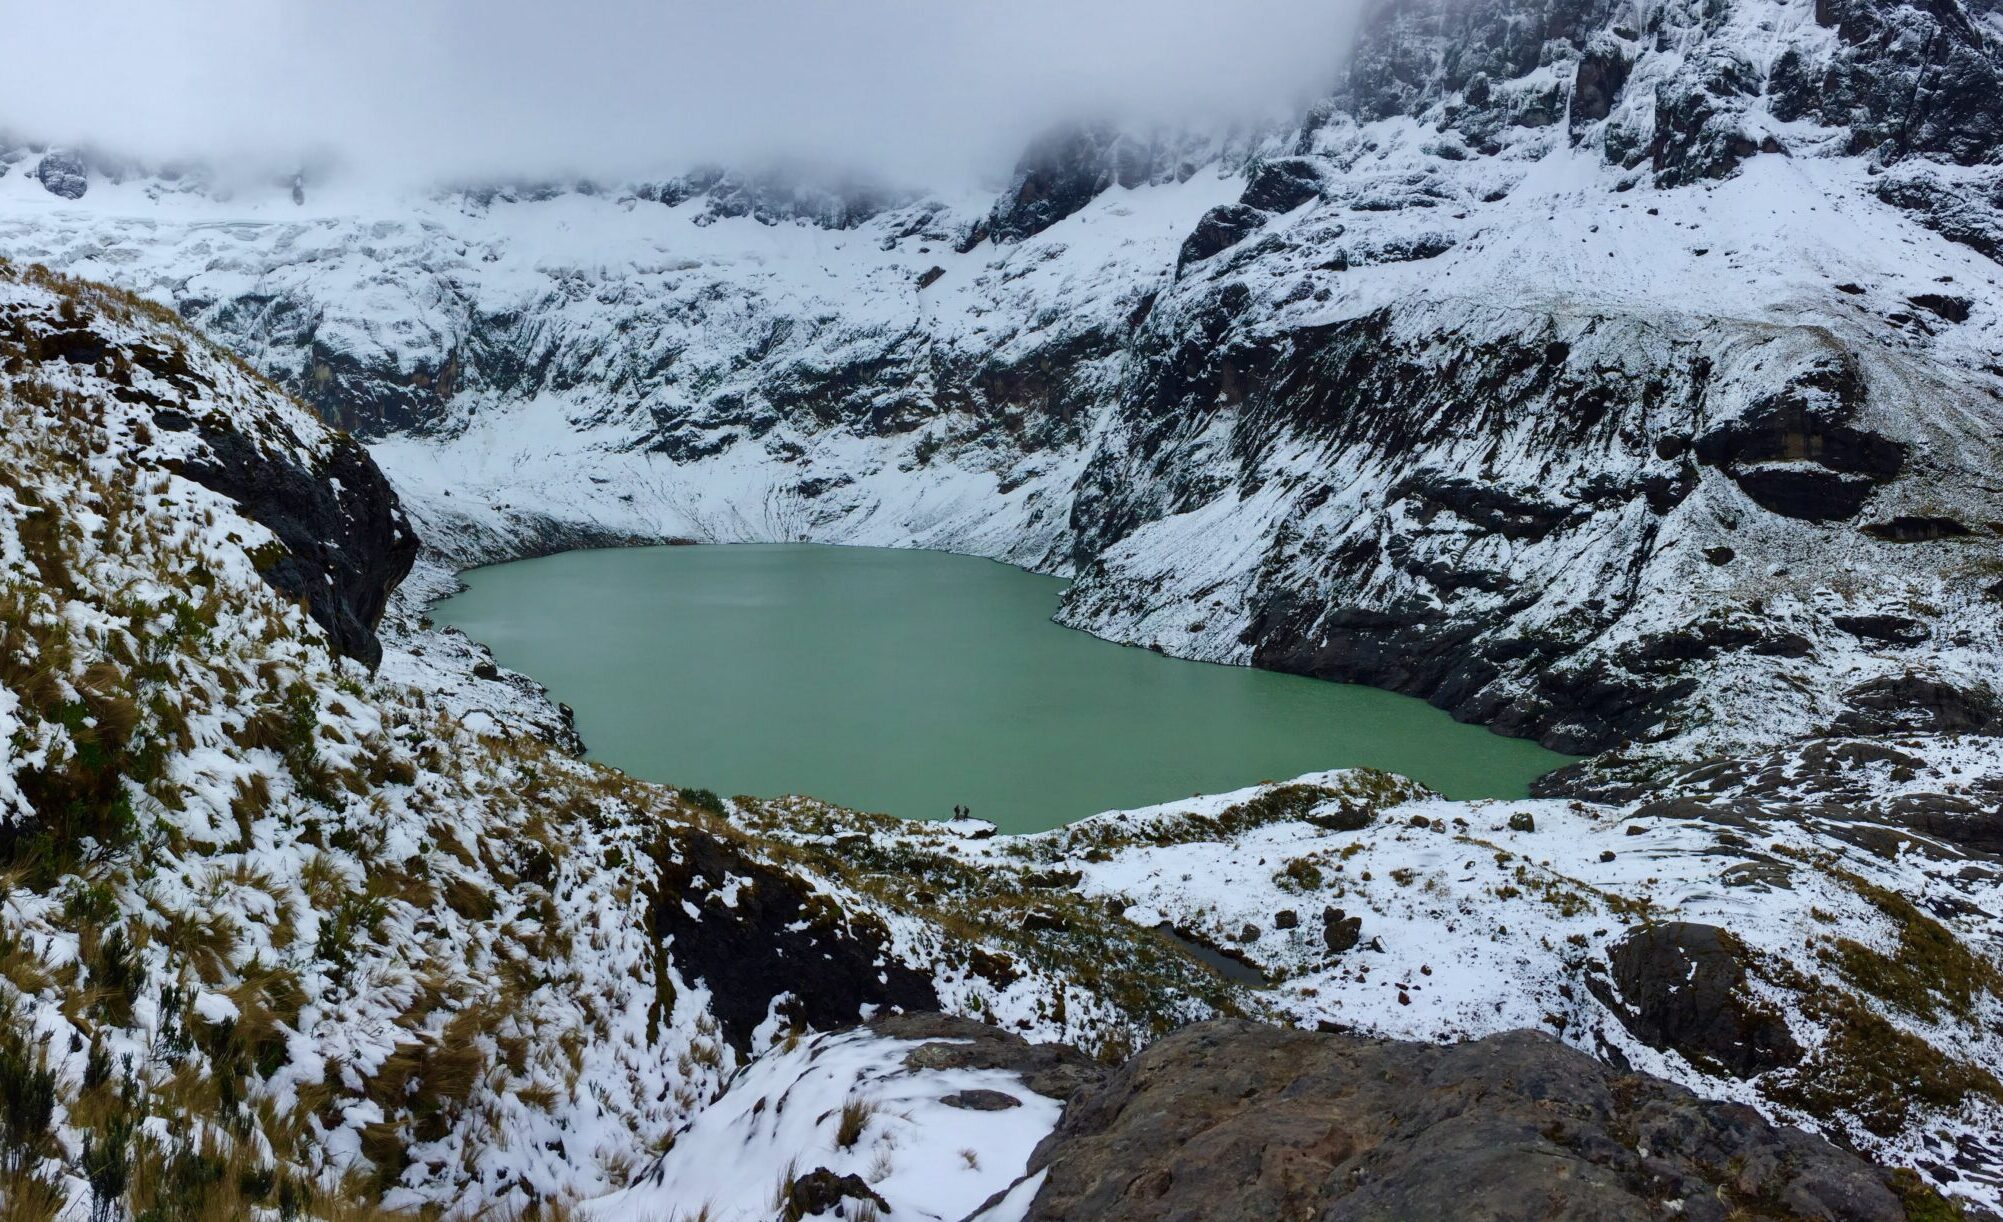 El Altar crater lake in Ecuador